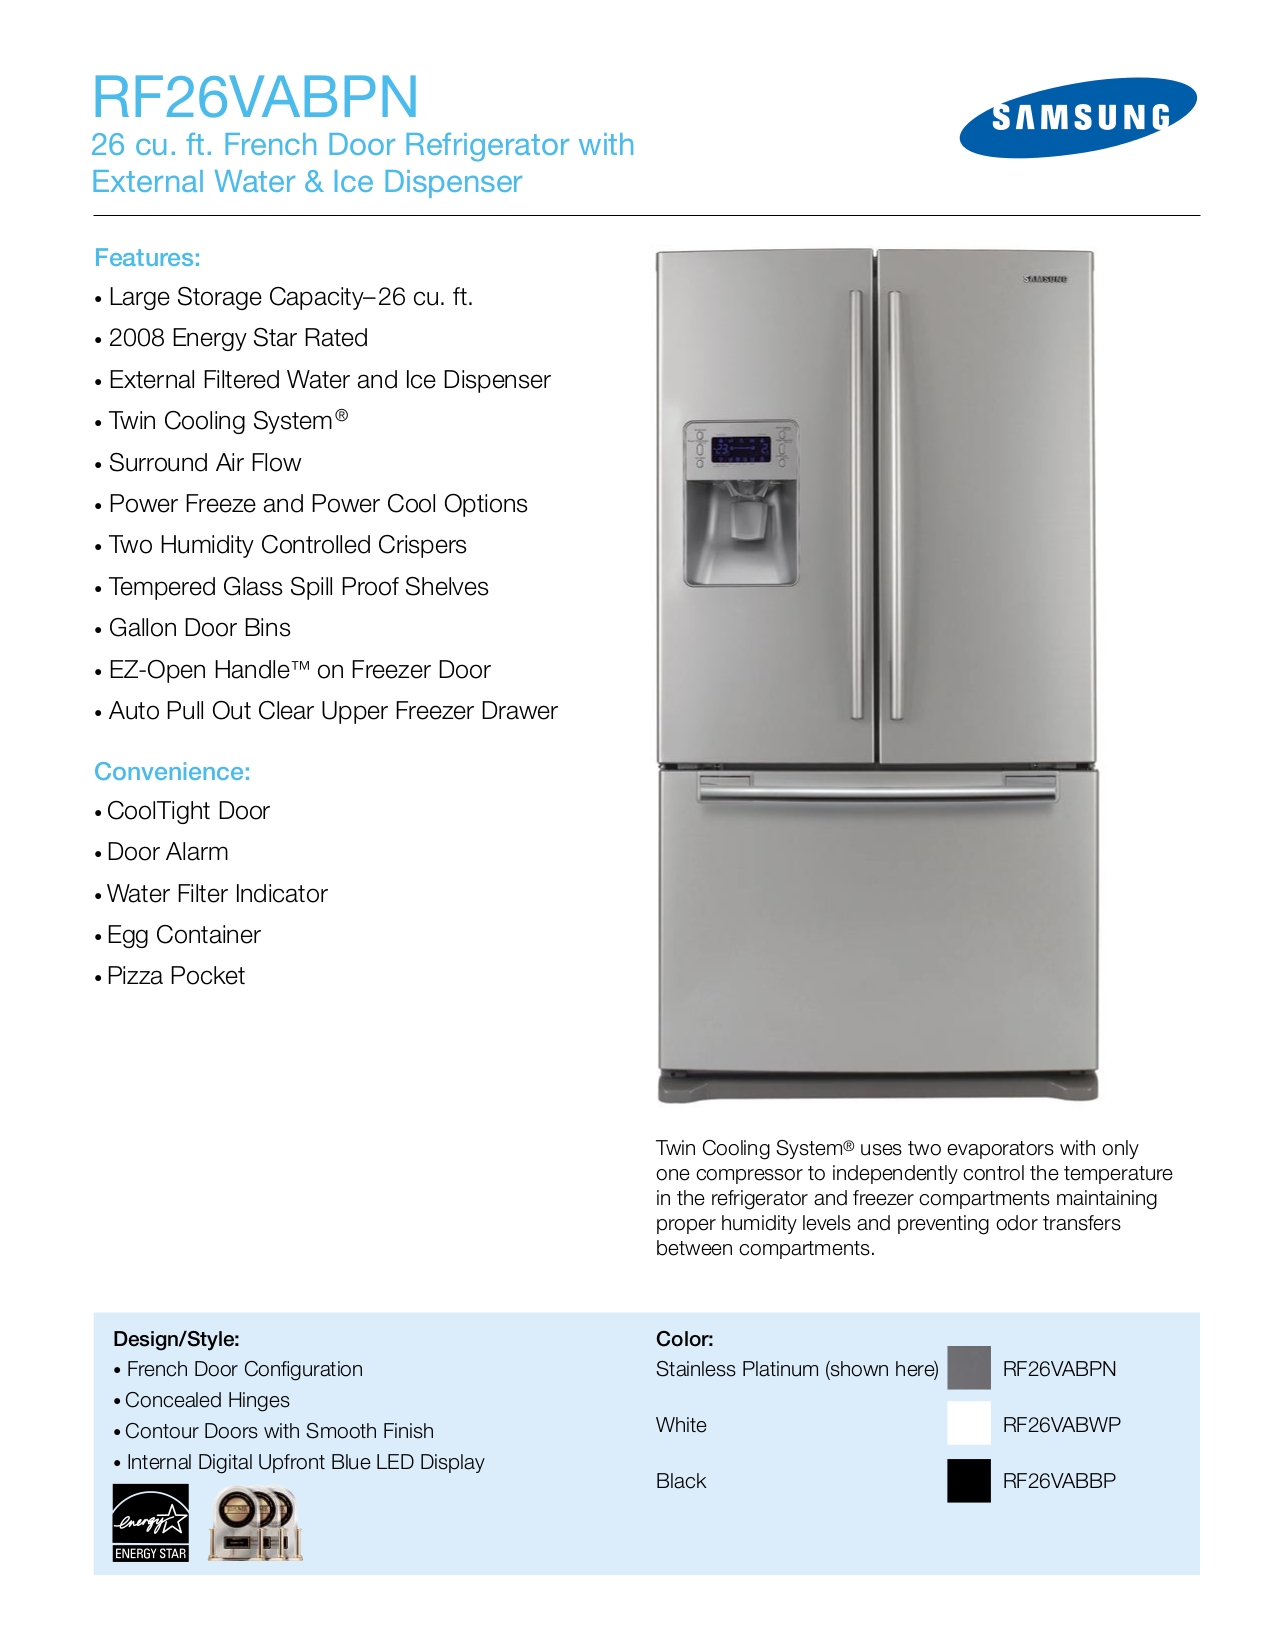 Download free pdf for Samsung RF26VABWP Refrigerator manual